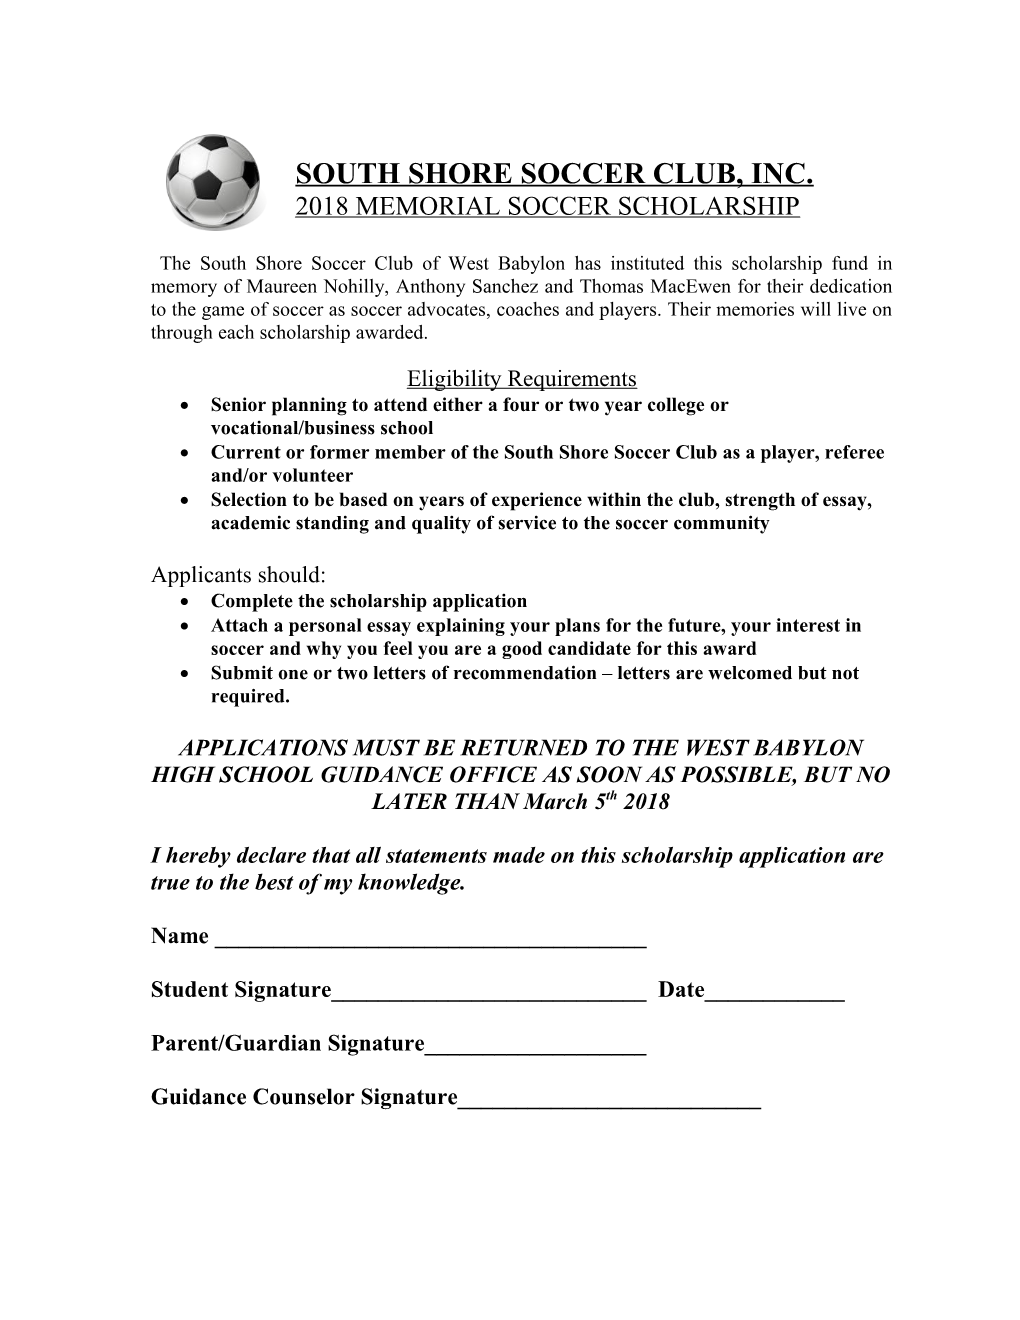 South Shore Soccer Club, Inc